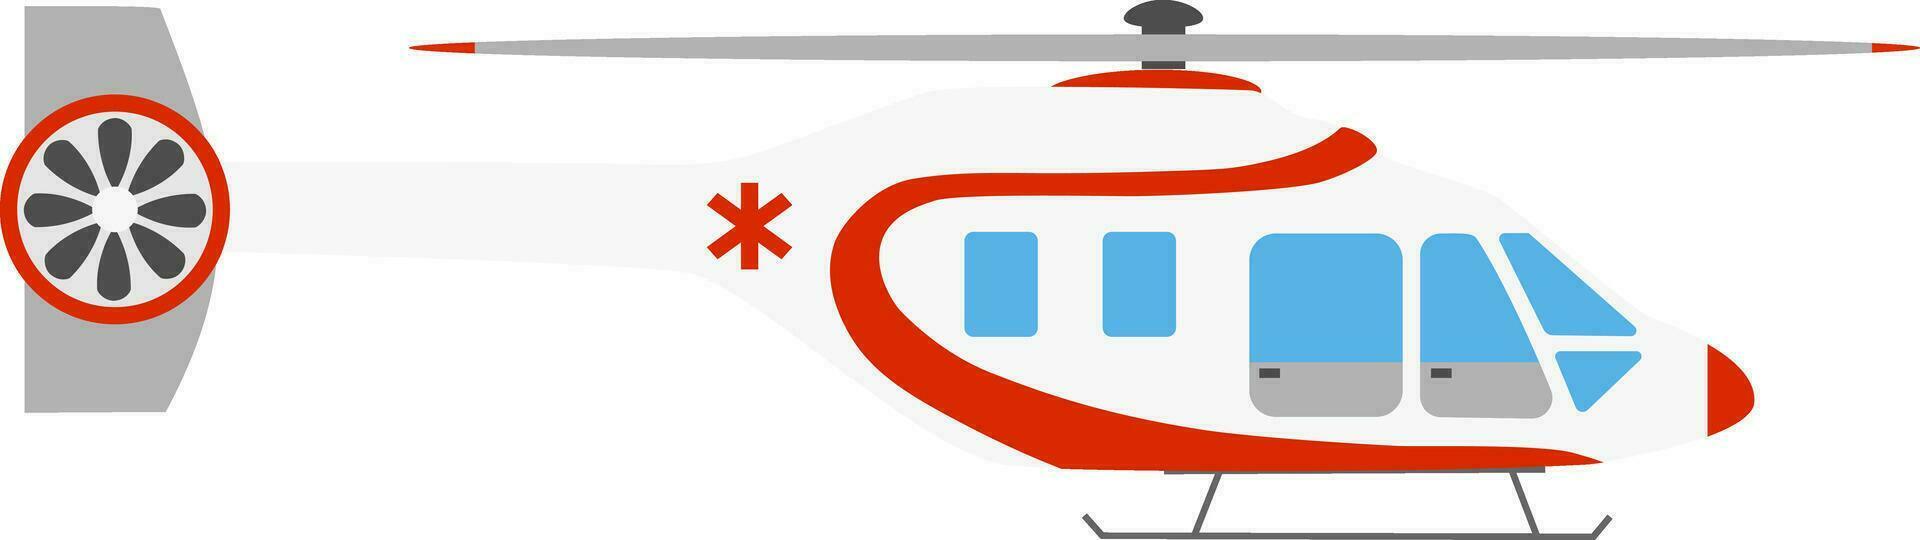 Vector illustration of helicopter ambulance isolated on white background